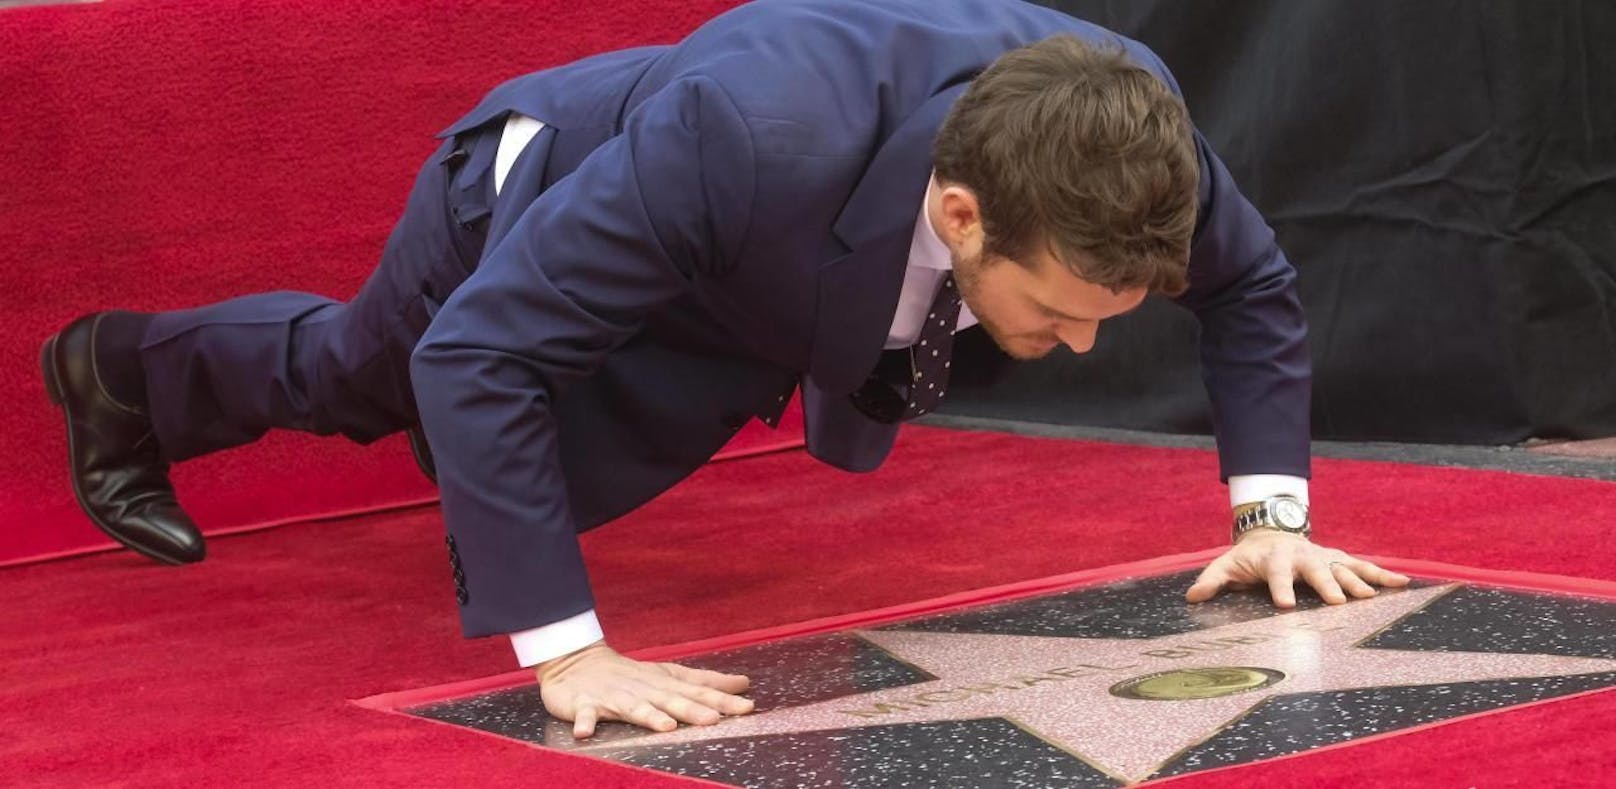 Michael Bublé feiert seinen Stern mit Liegestützen